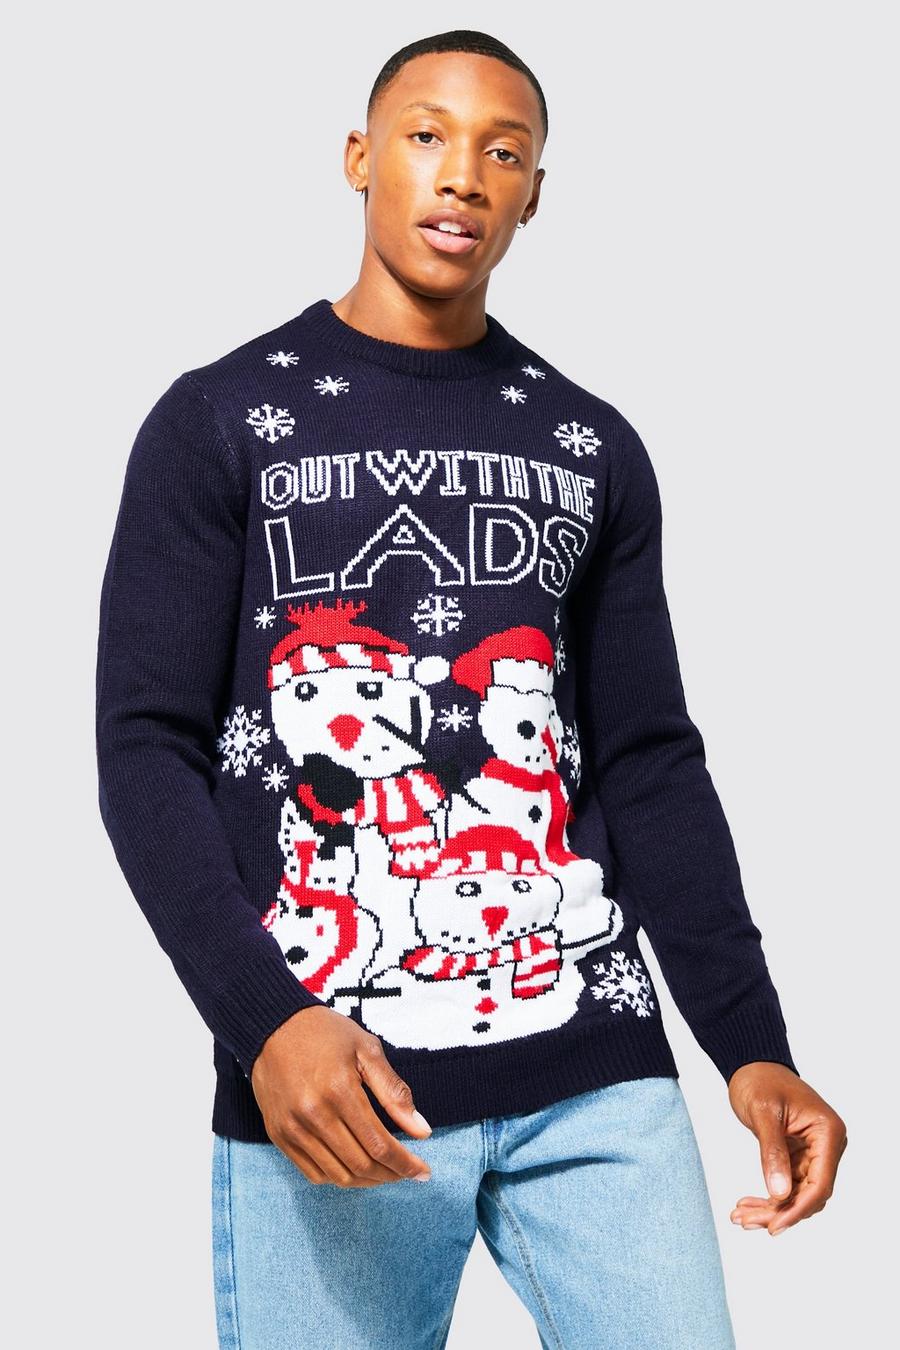 Effectiviteit hoffelijkheid eeuwig Men's Lads Night Out Knitted Christmas Jumper | boohoo